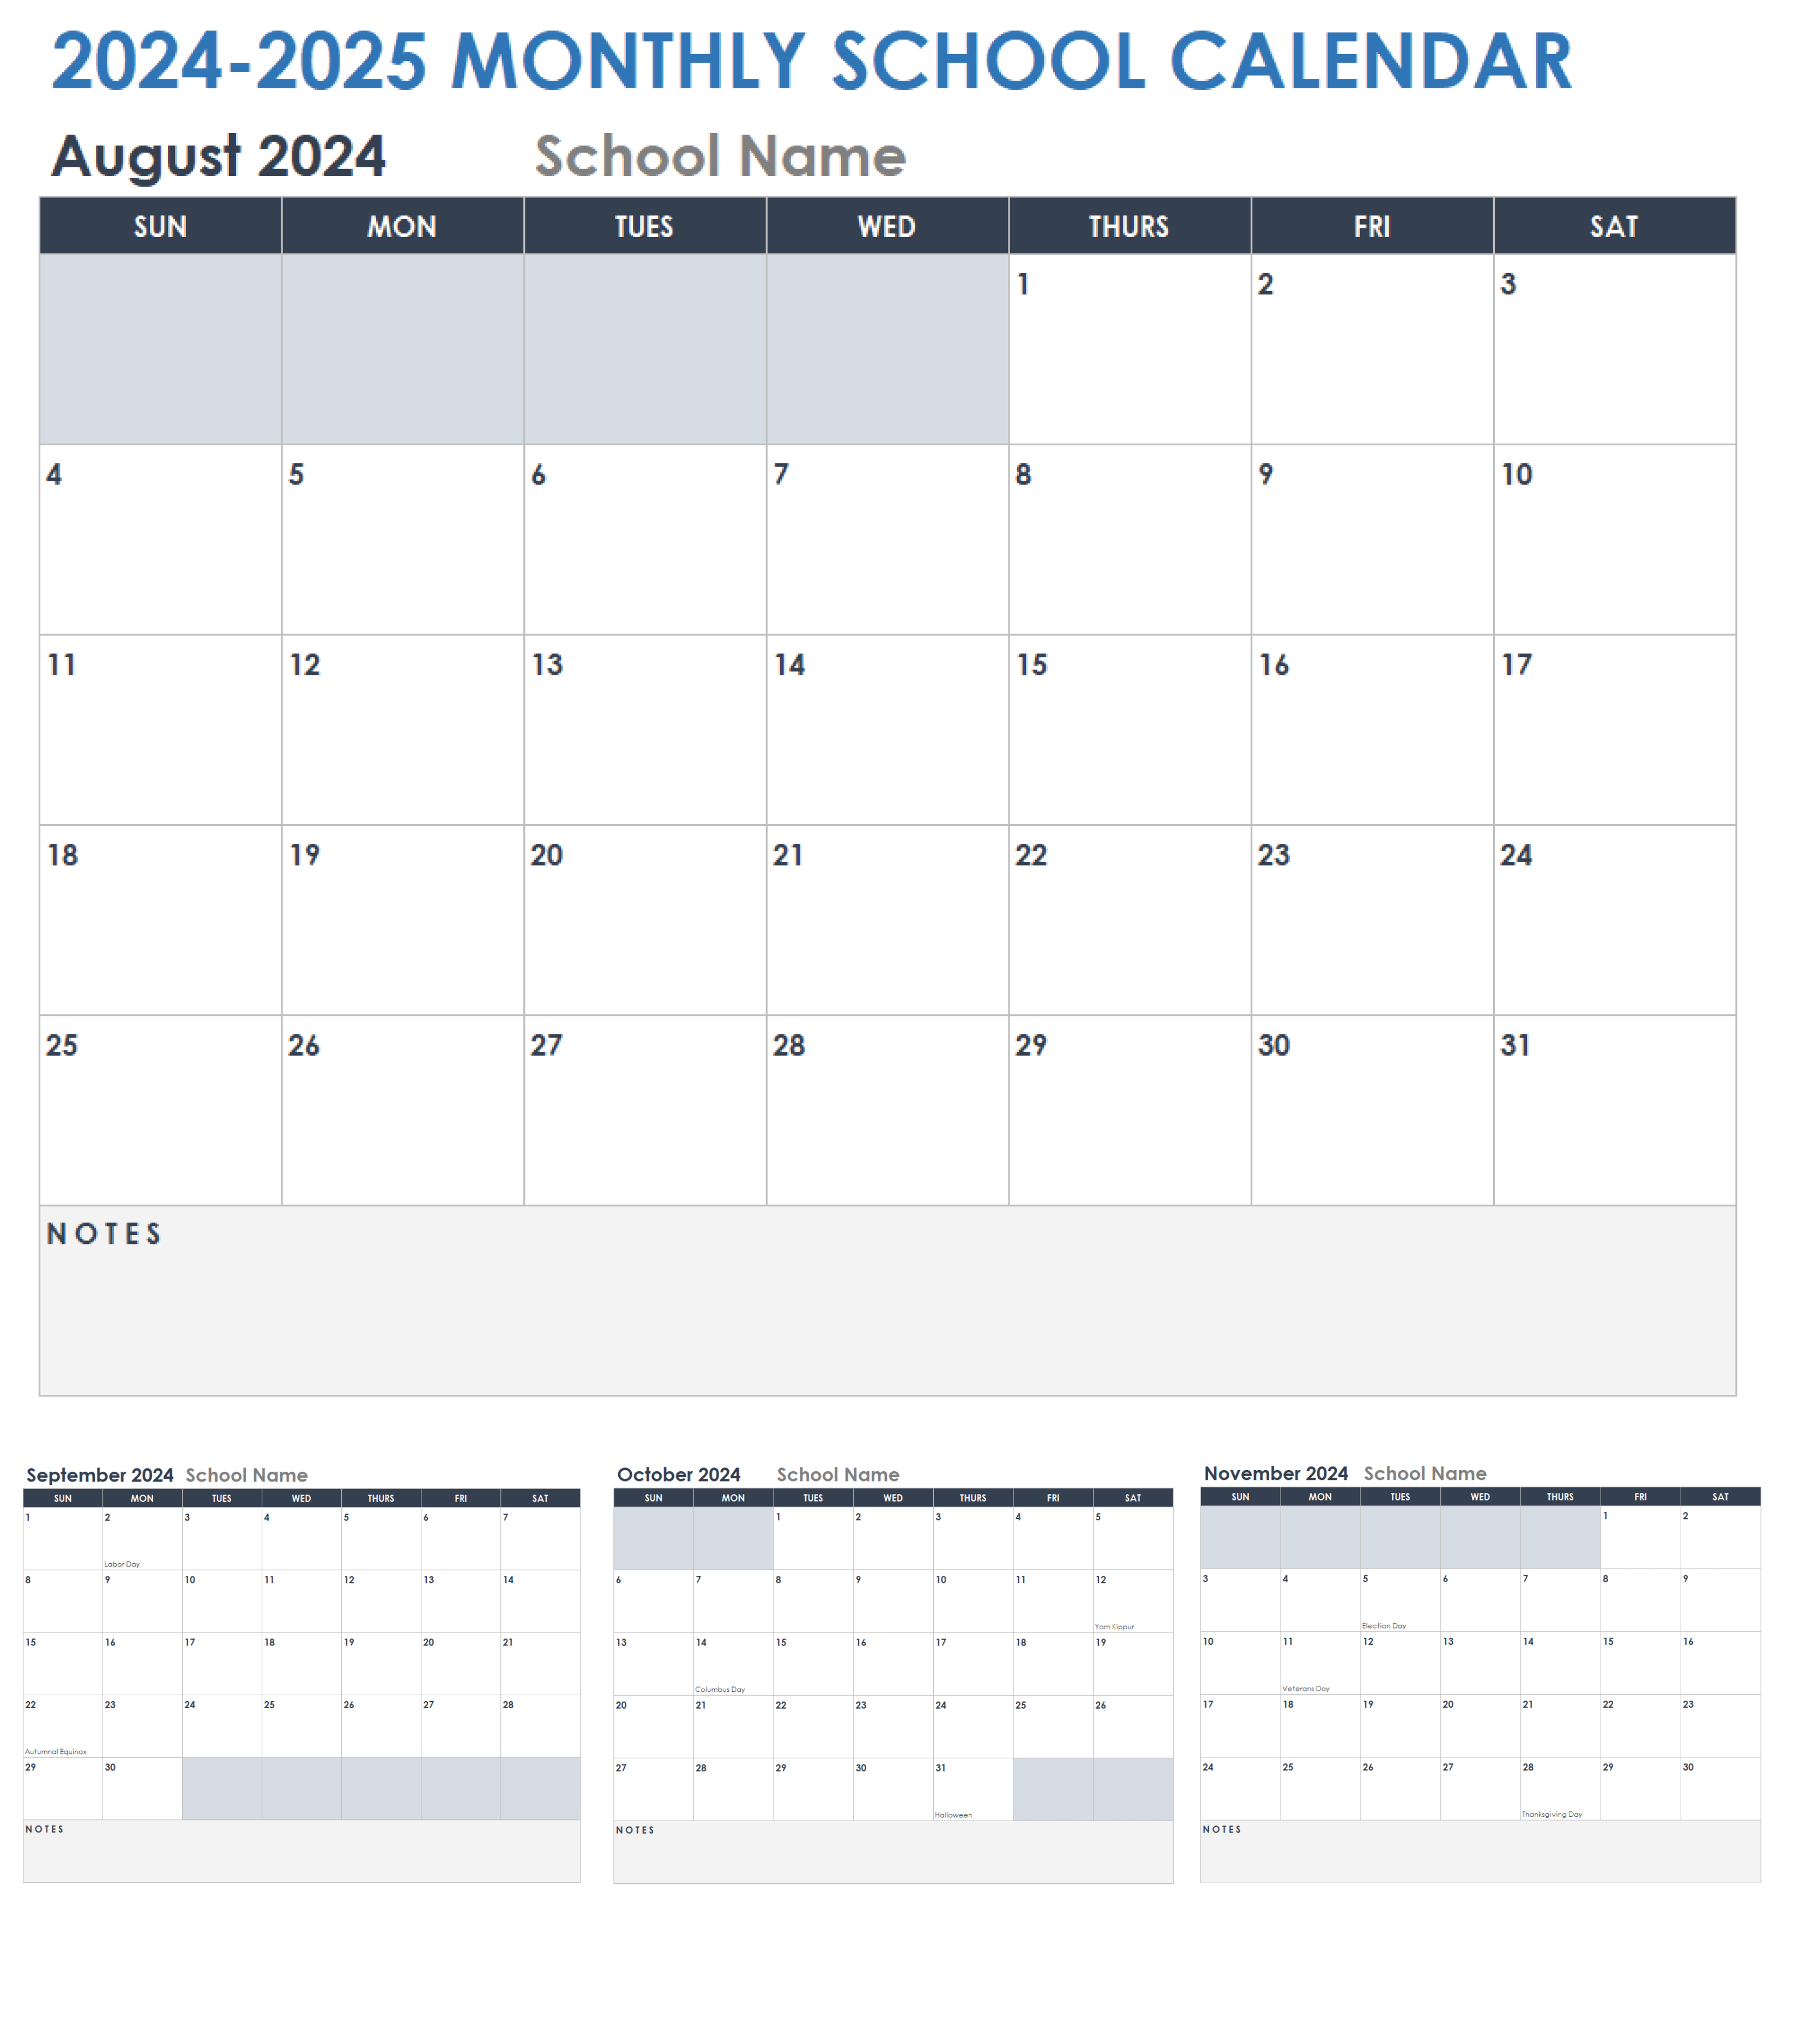 2024-2025 Monthly School Calendar Template